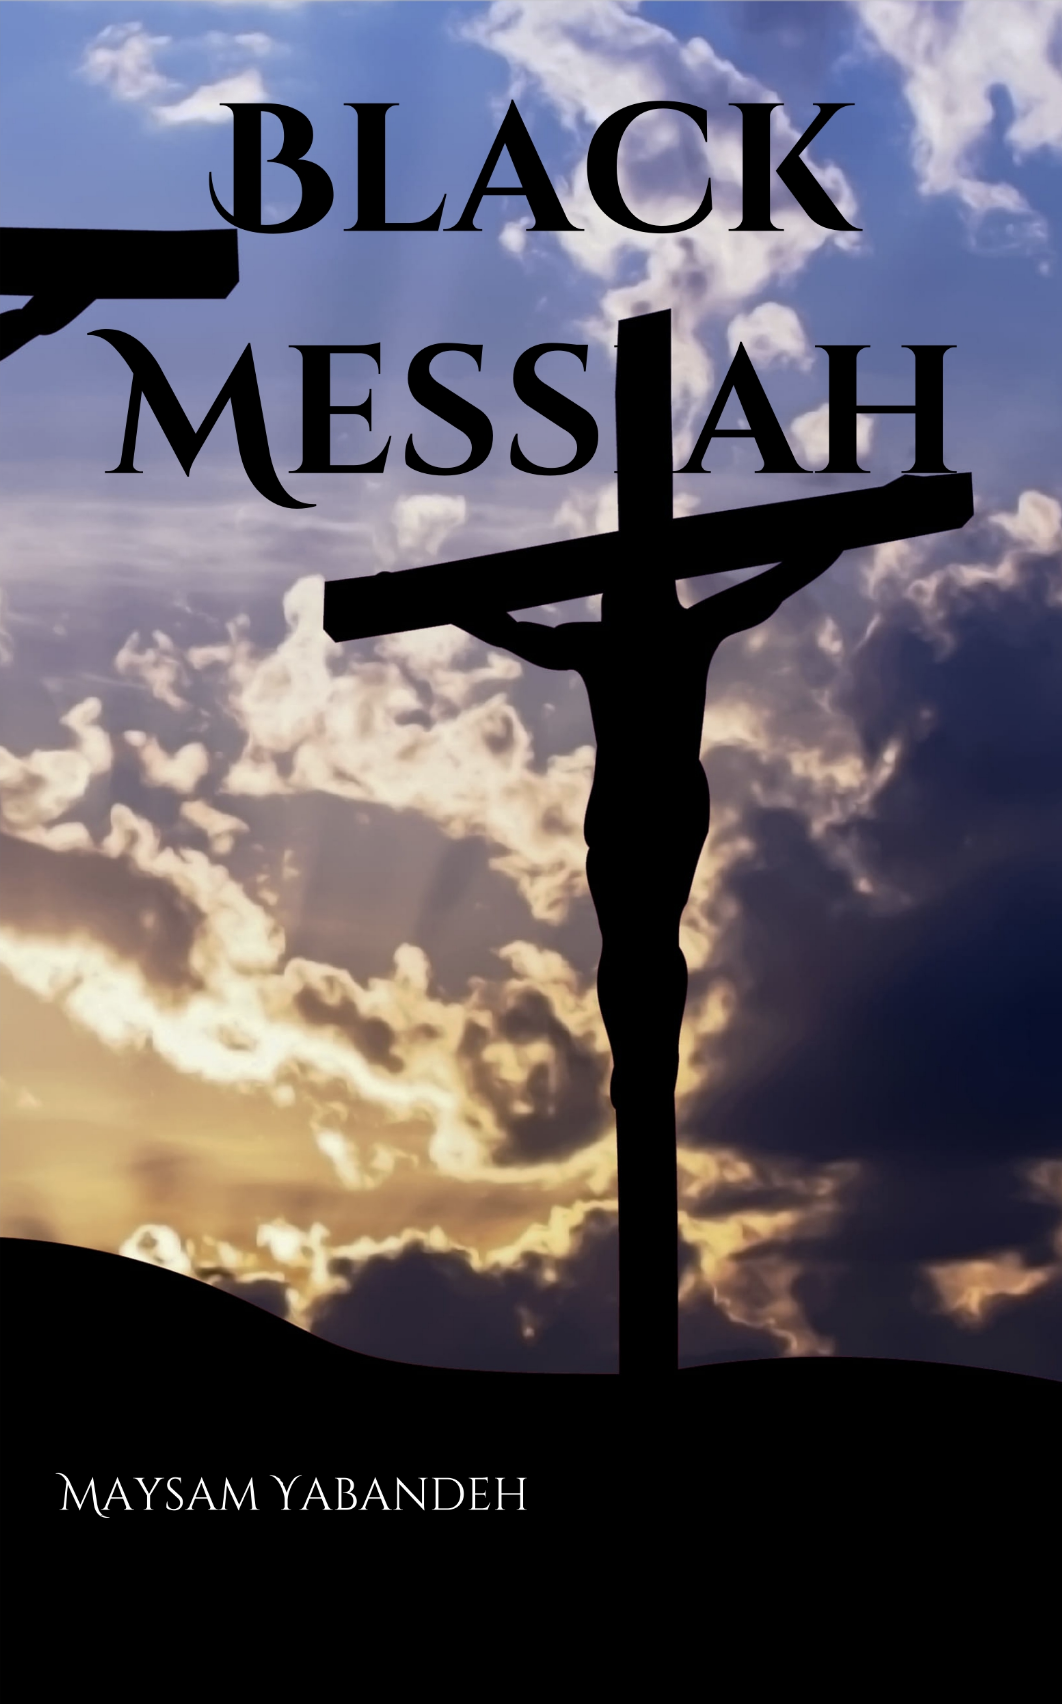 FREE: Black Messiah by Maysam Yabandeh